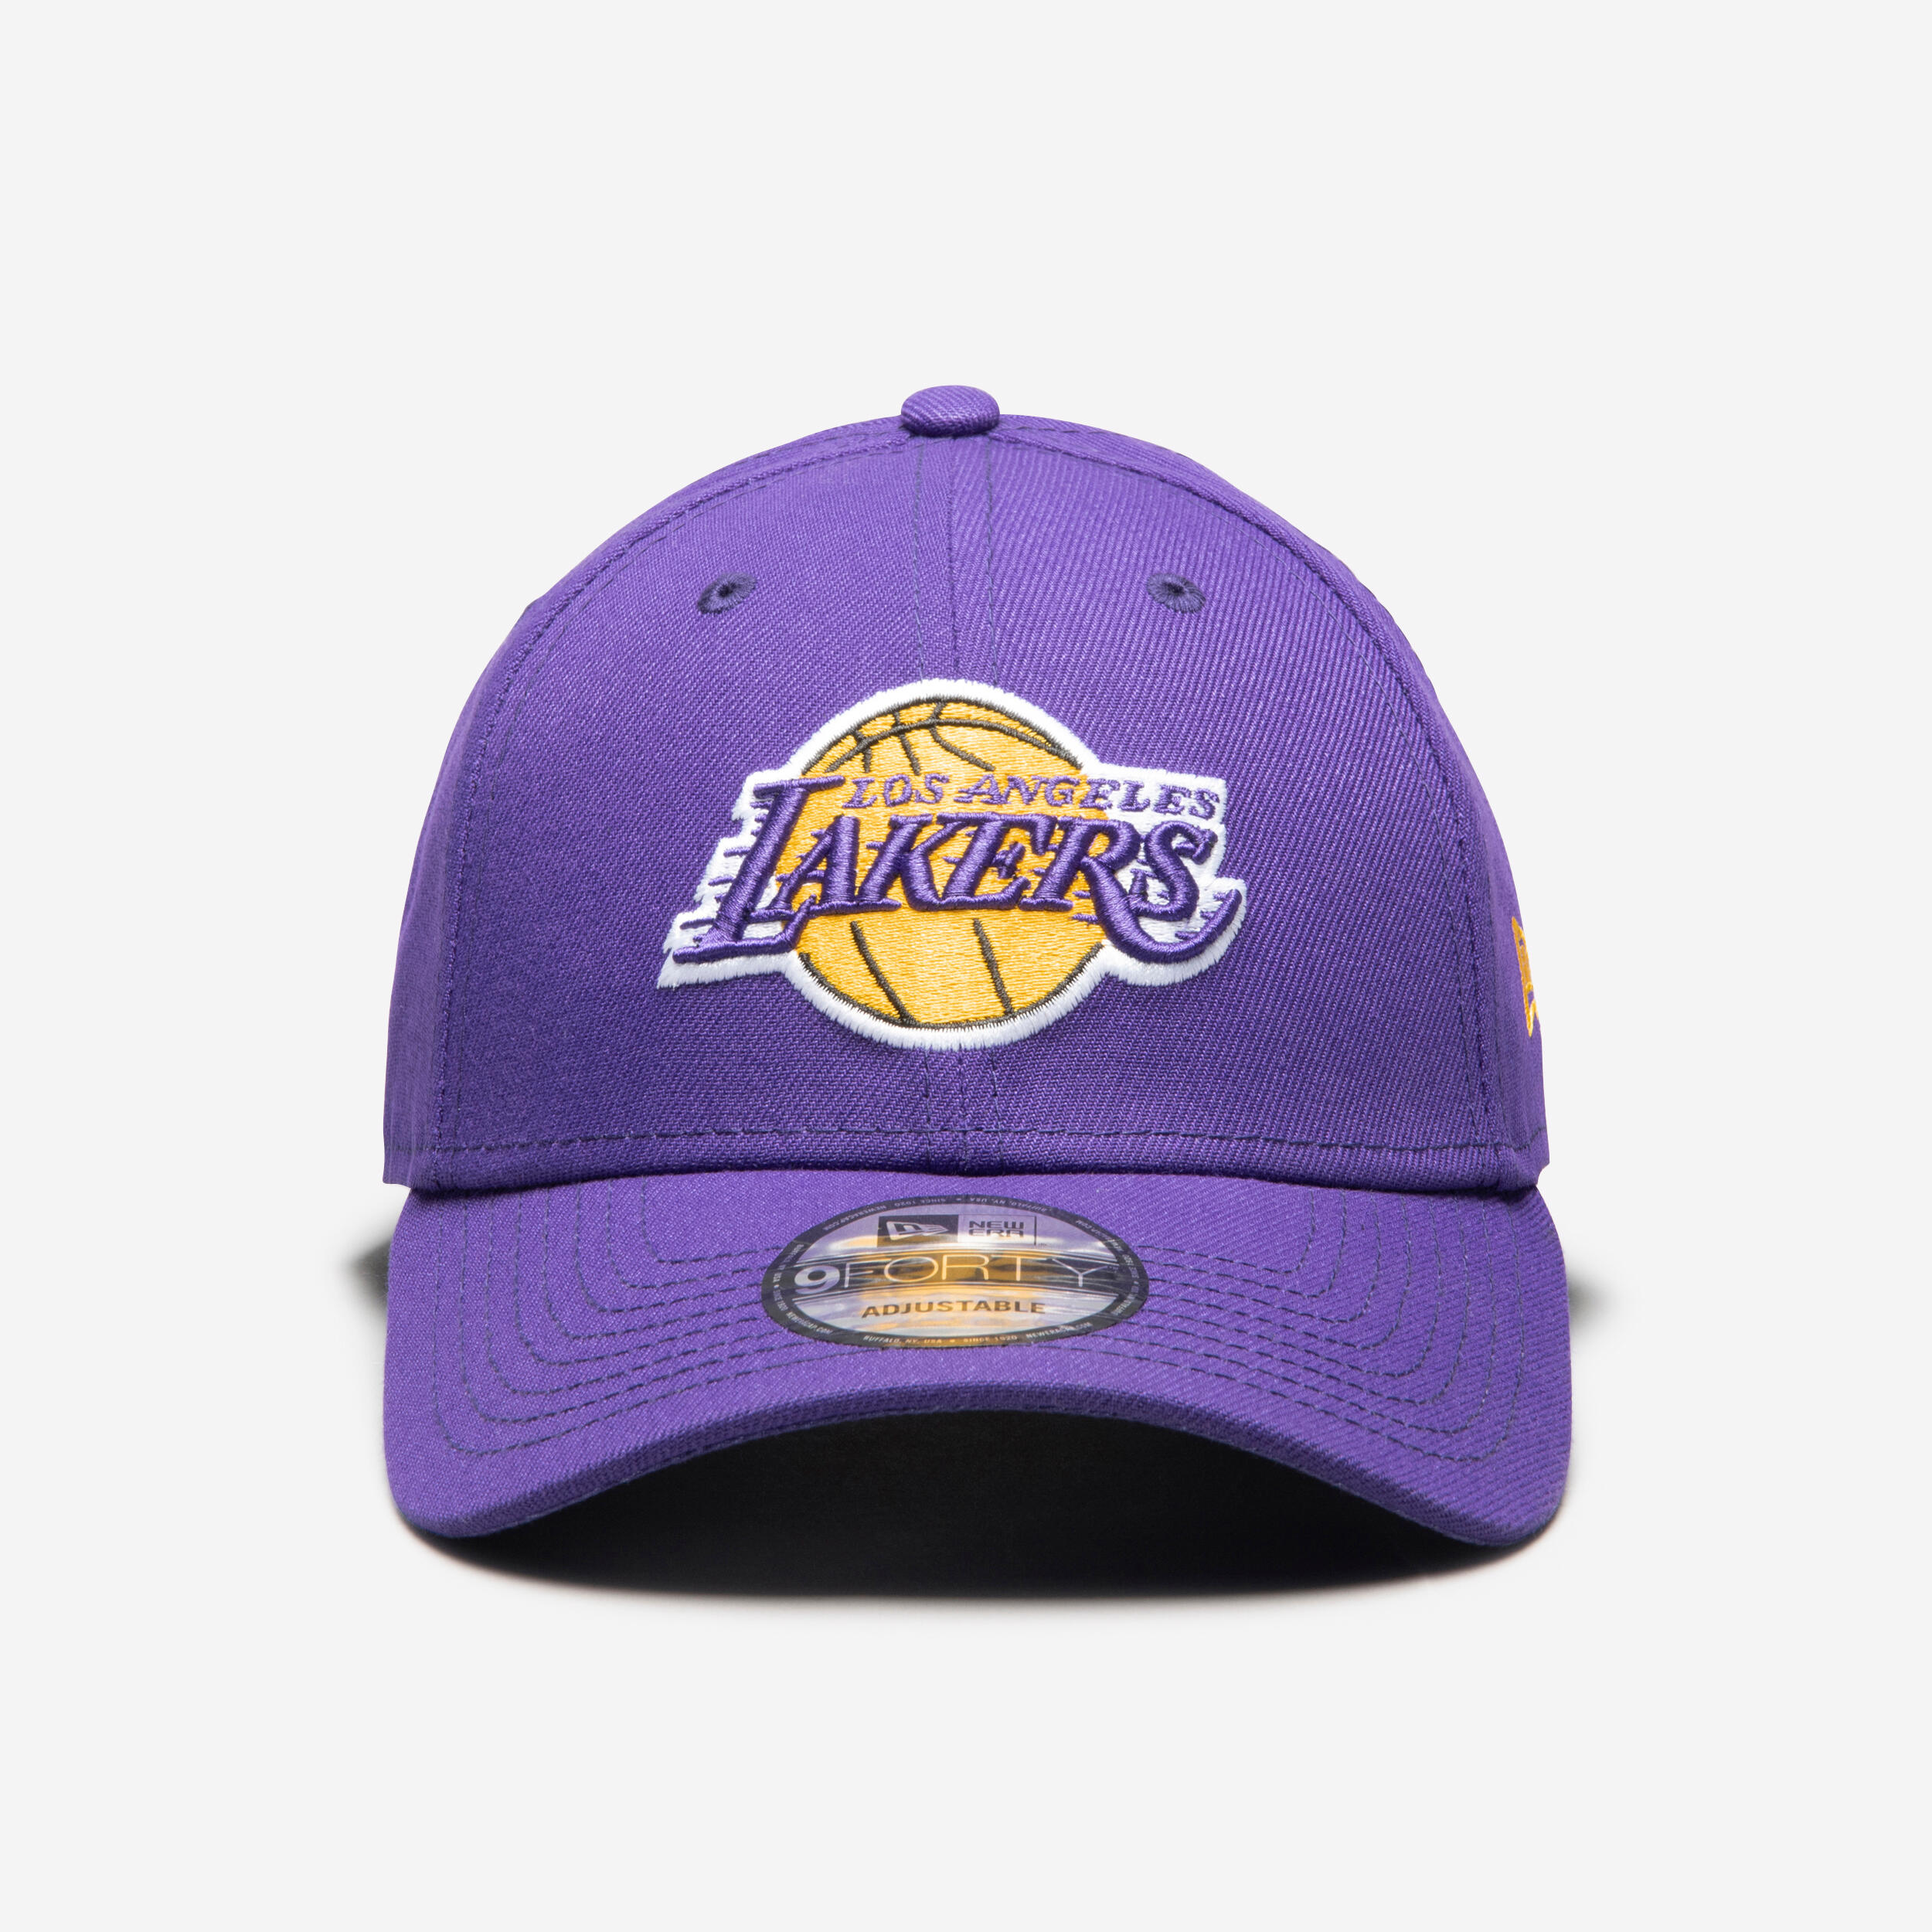 Men's/Women's Basketball Cap NBA Los Angeles Lakers/Purple Decathlon